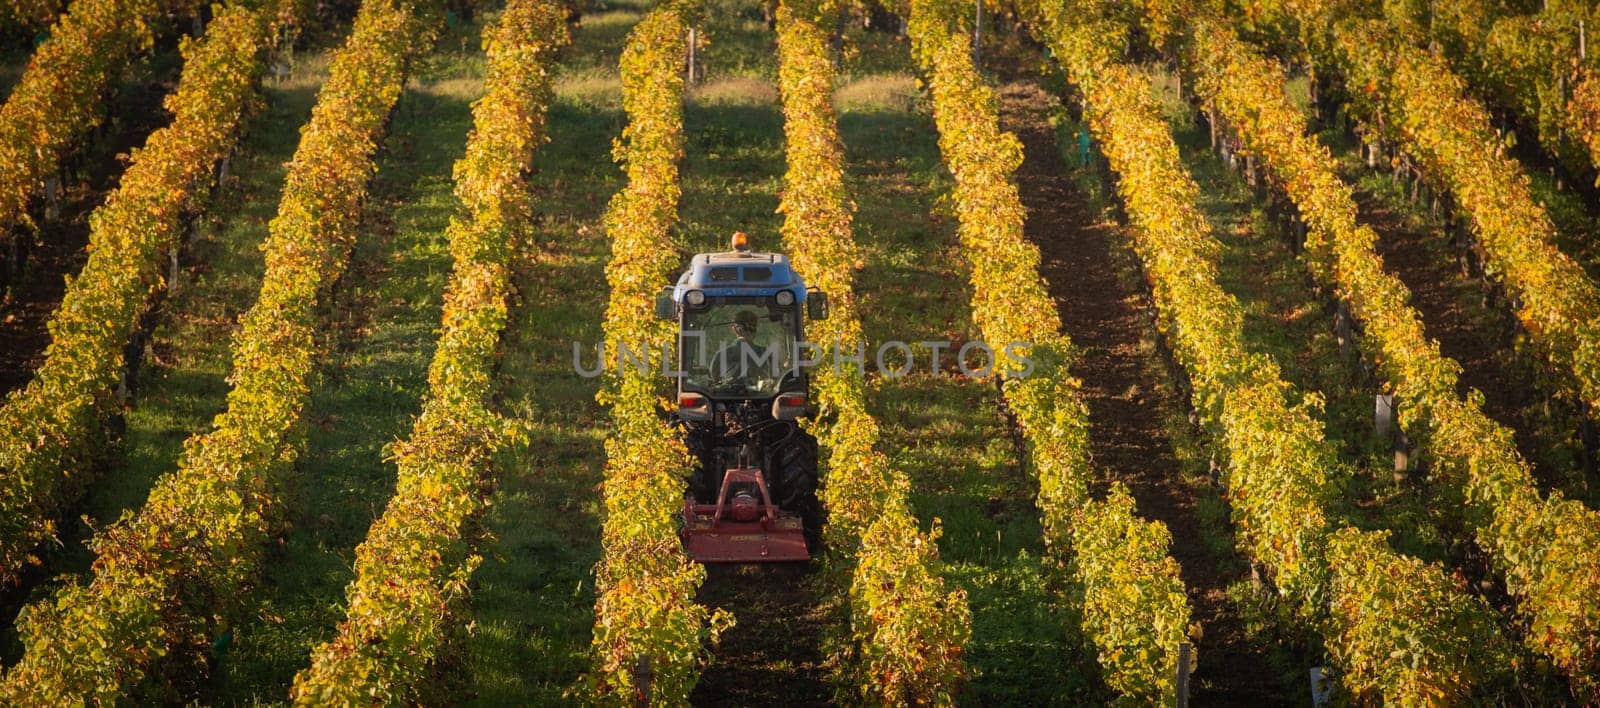 Vineyard landscape, tractor in Vineyard south west of France, Bordeaux Vineyard by FreeProd